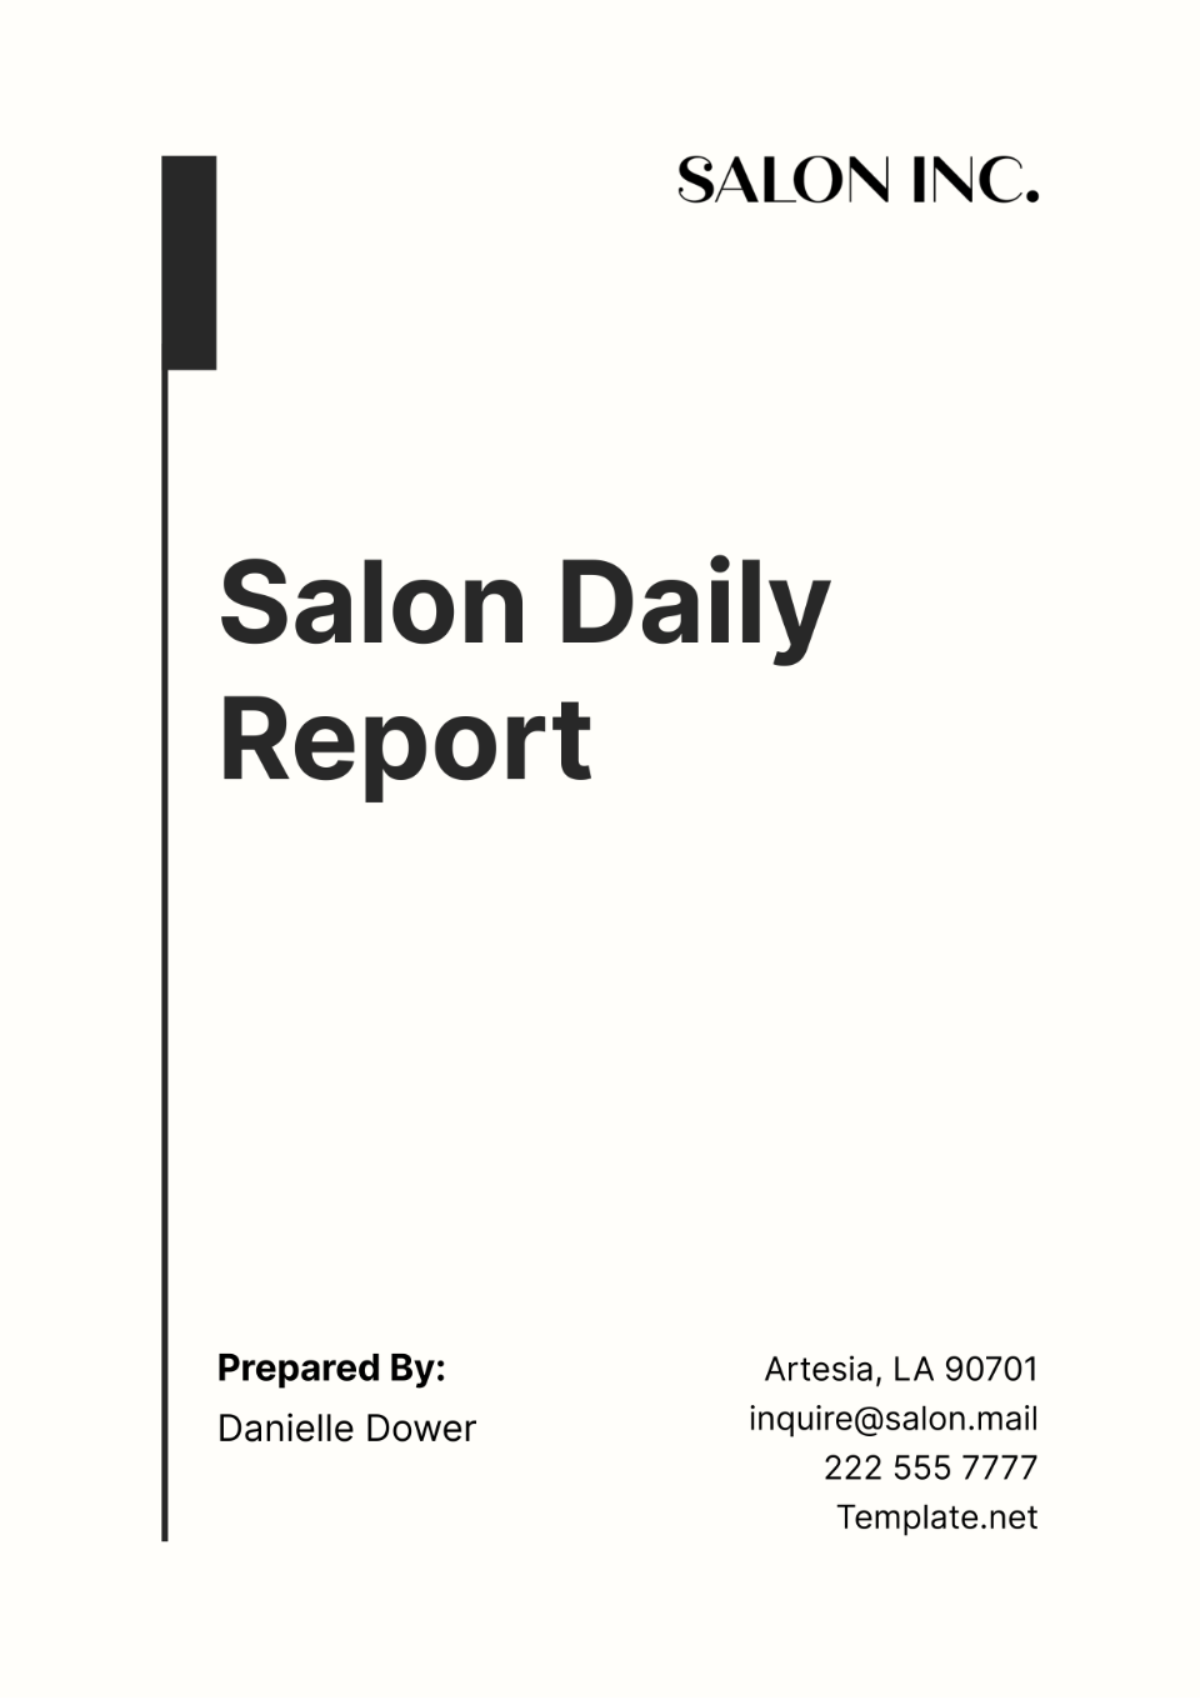 Salon Daily Report Template